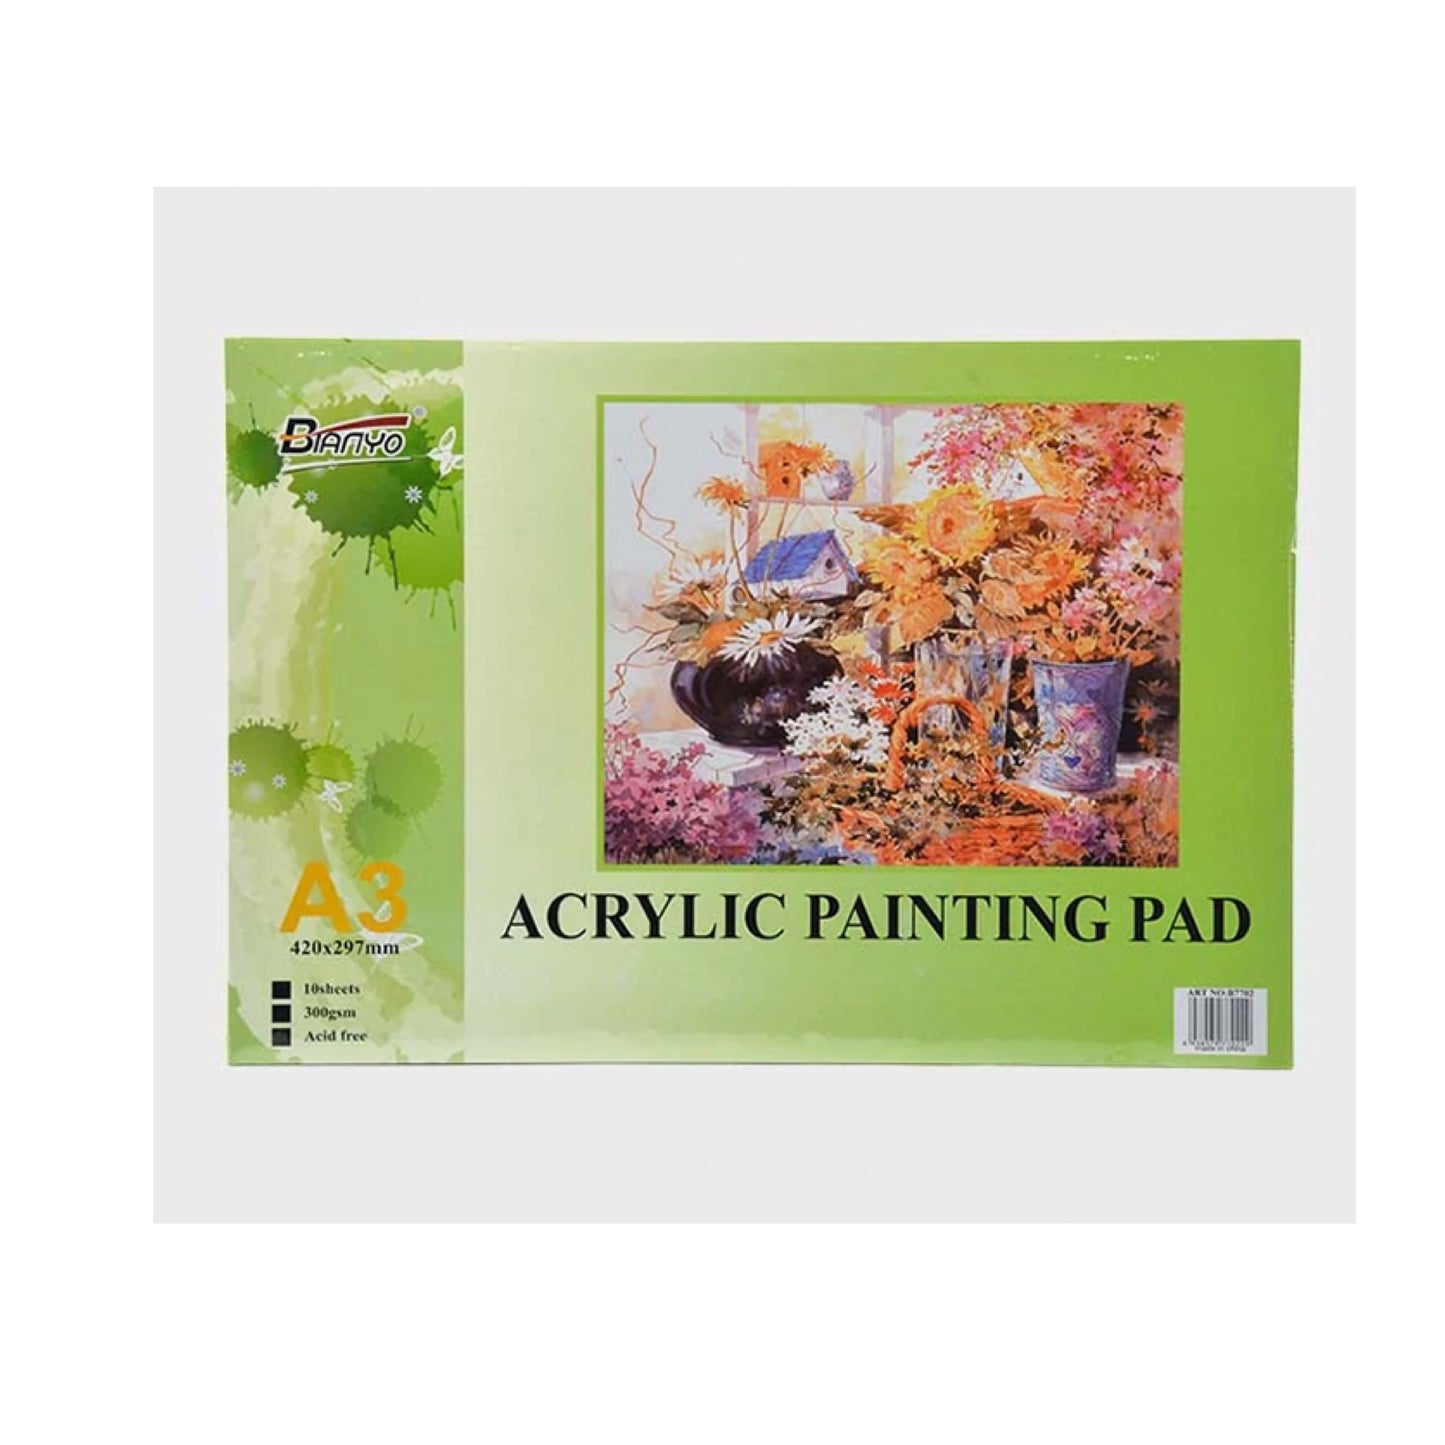 Acrylic Painting Pad || دفتر رسم و تلوين اكريليك